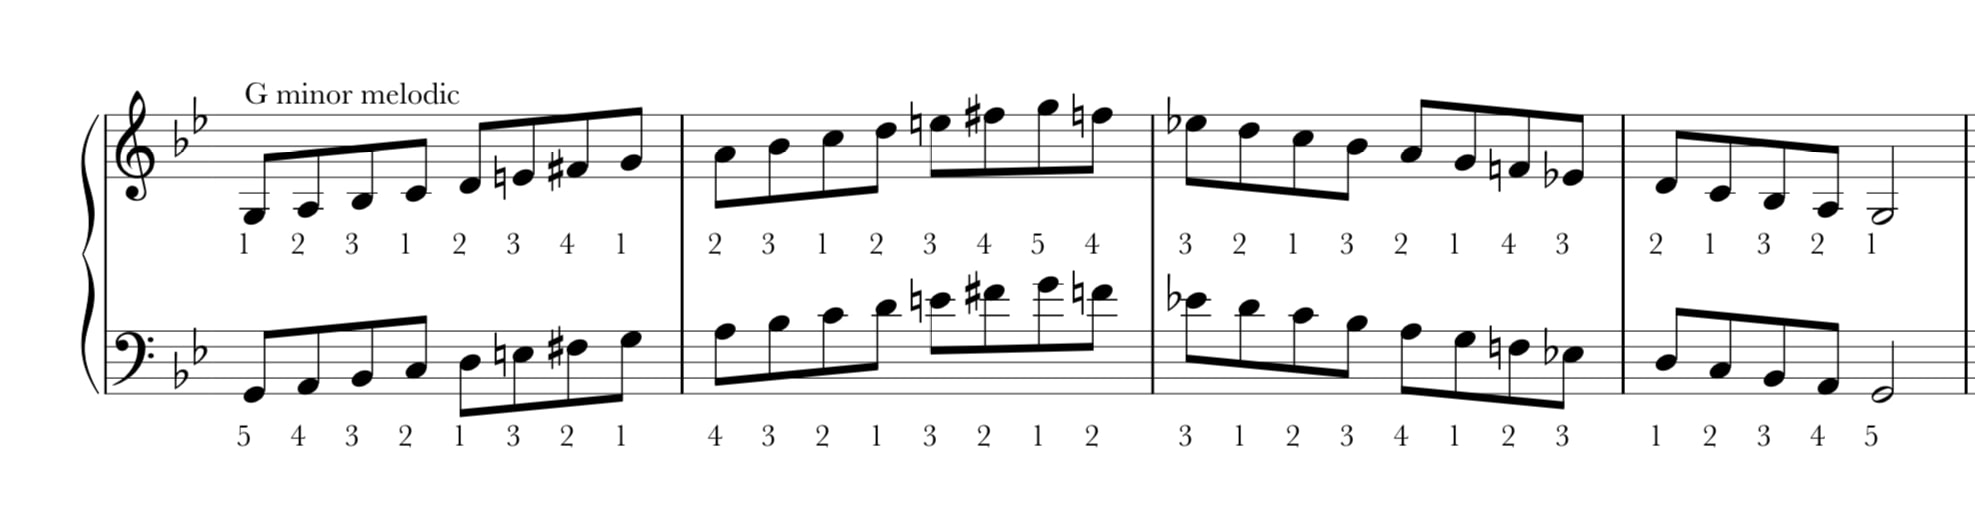 b flat melodic minor scale bass clef